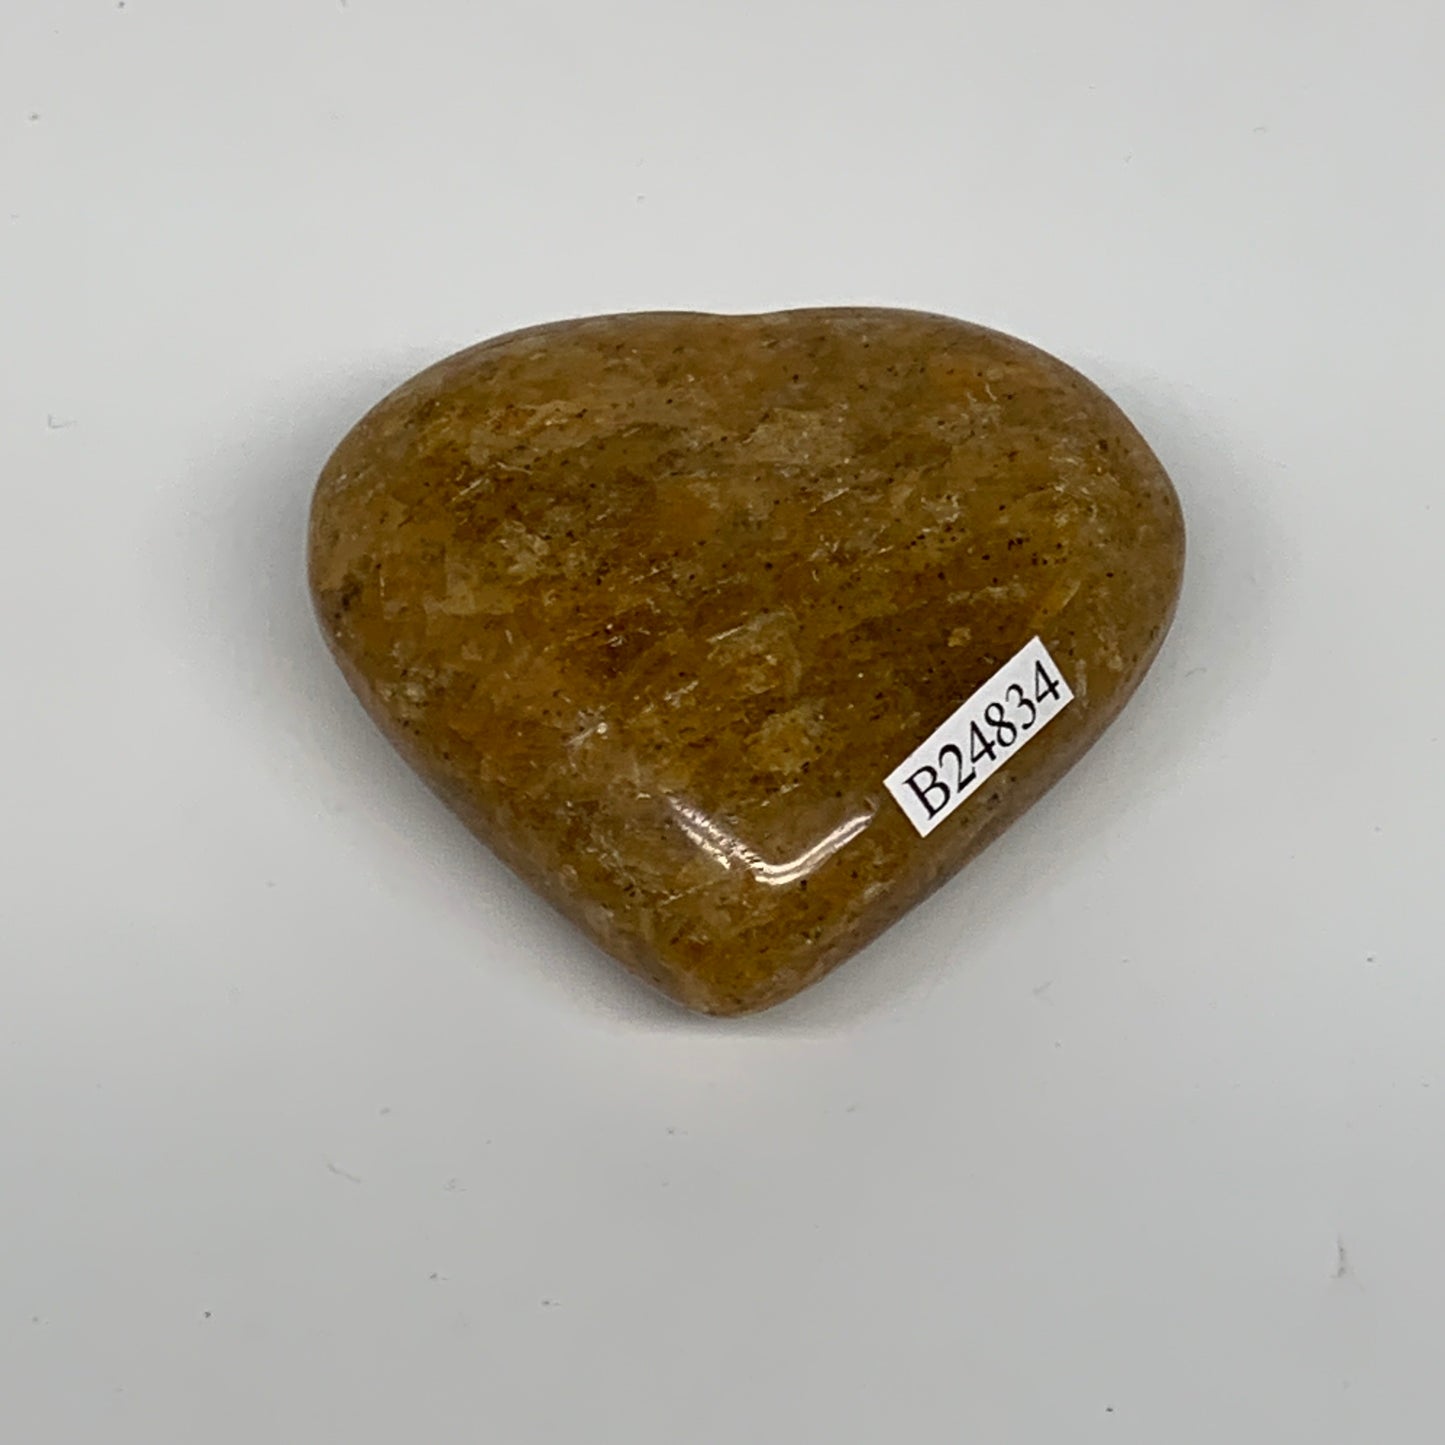 90.2g, 2"x2.3"x0.9", Natural Golden Quartz Heart Small Polished Crystal, B24834